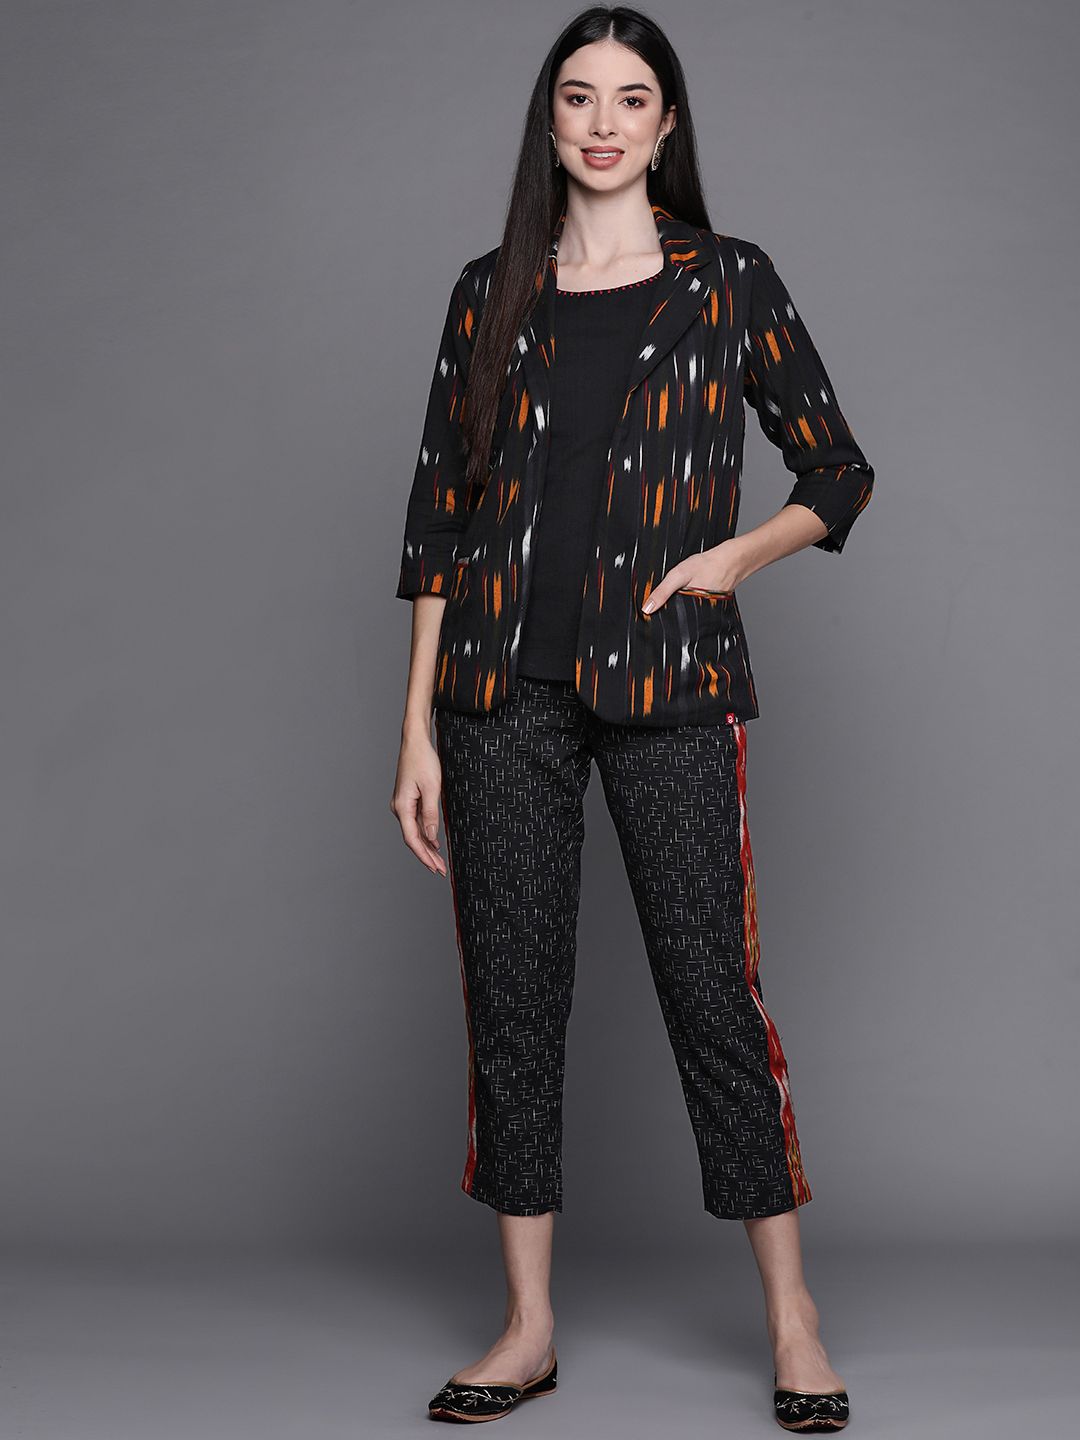 Biba Women Black & Orange Ikat Print Top with Trousers & Jacket Price in India